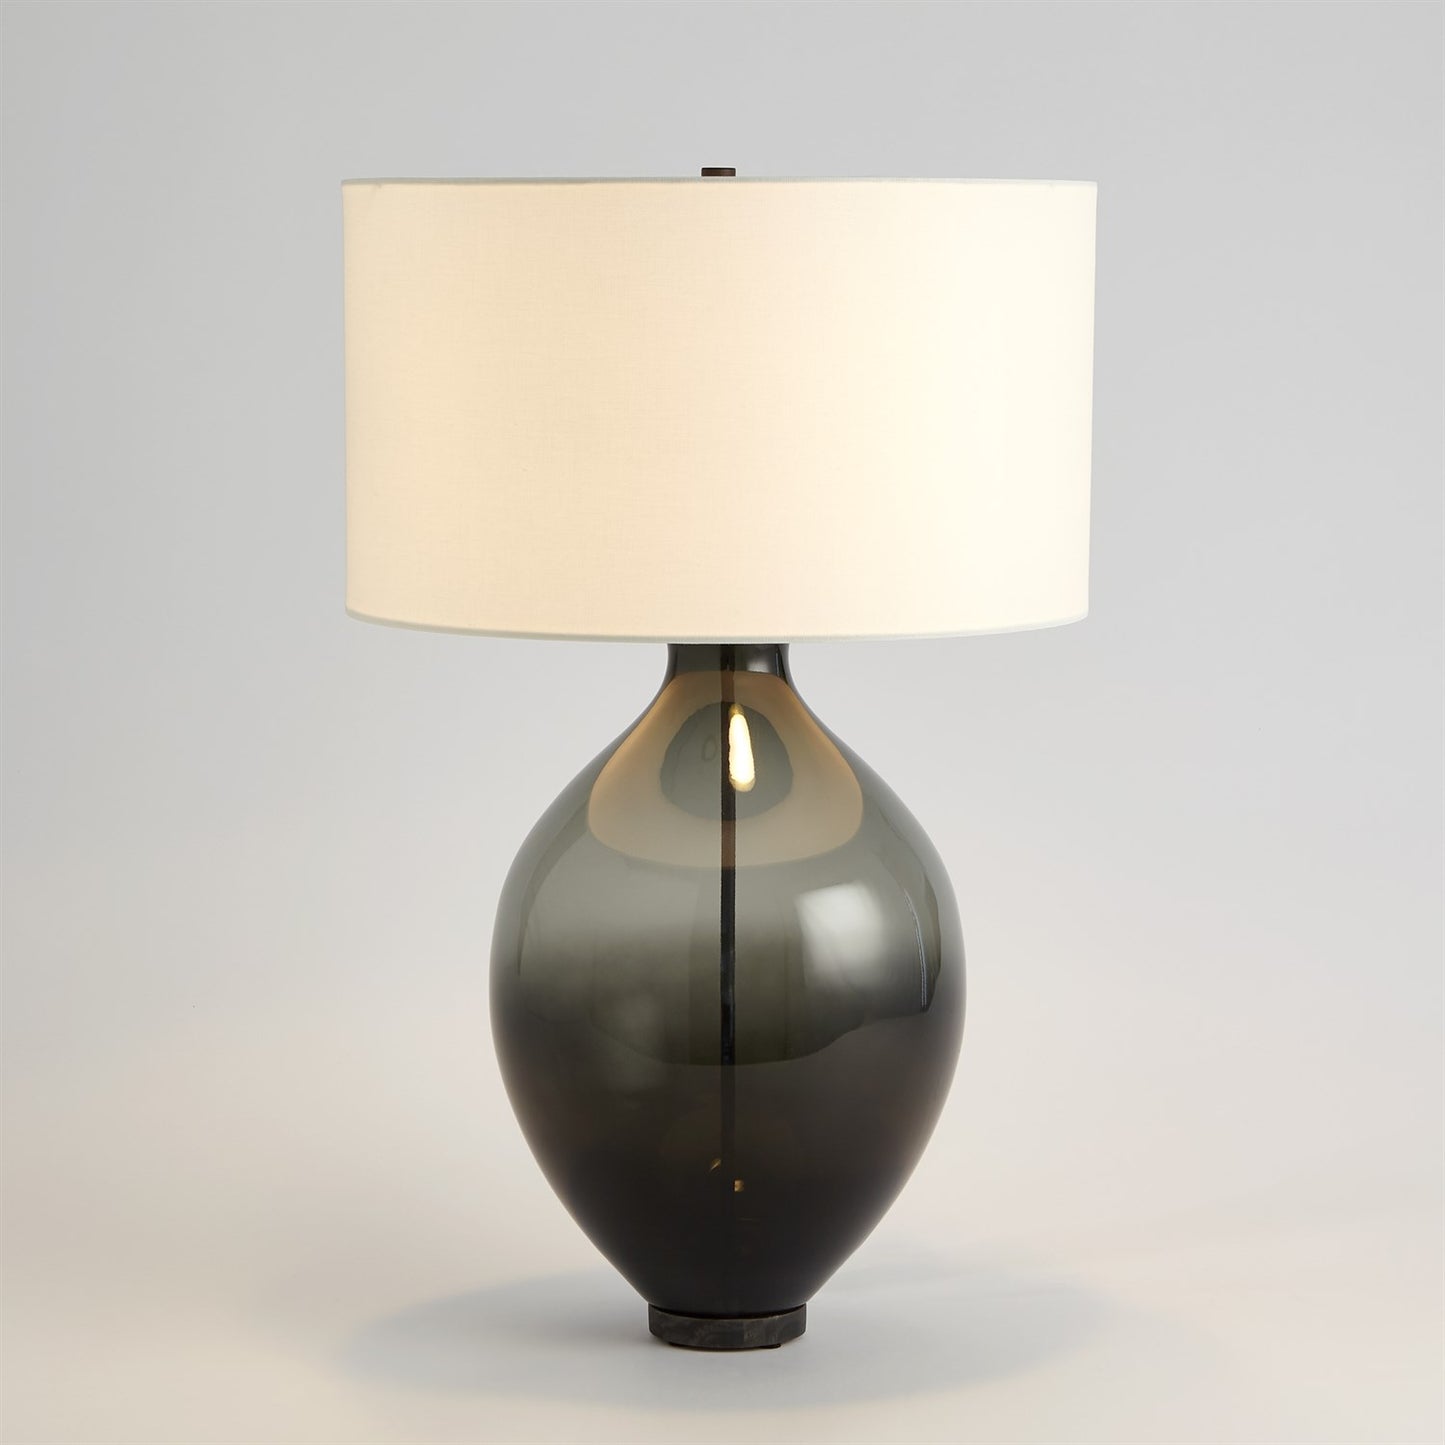 Amphora Glass Table Lamp - Grey